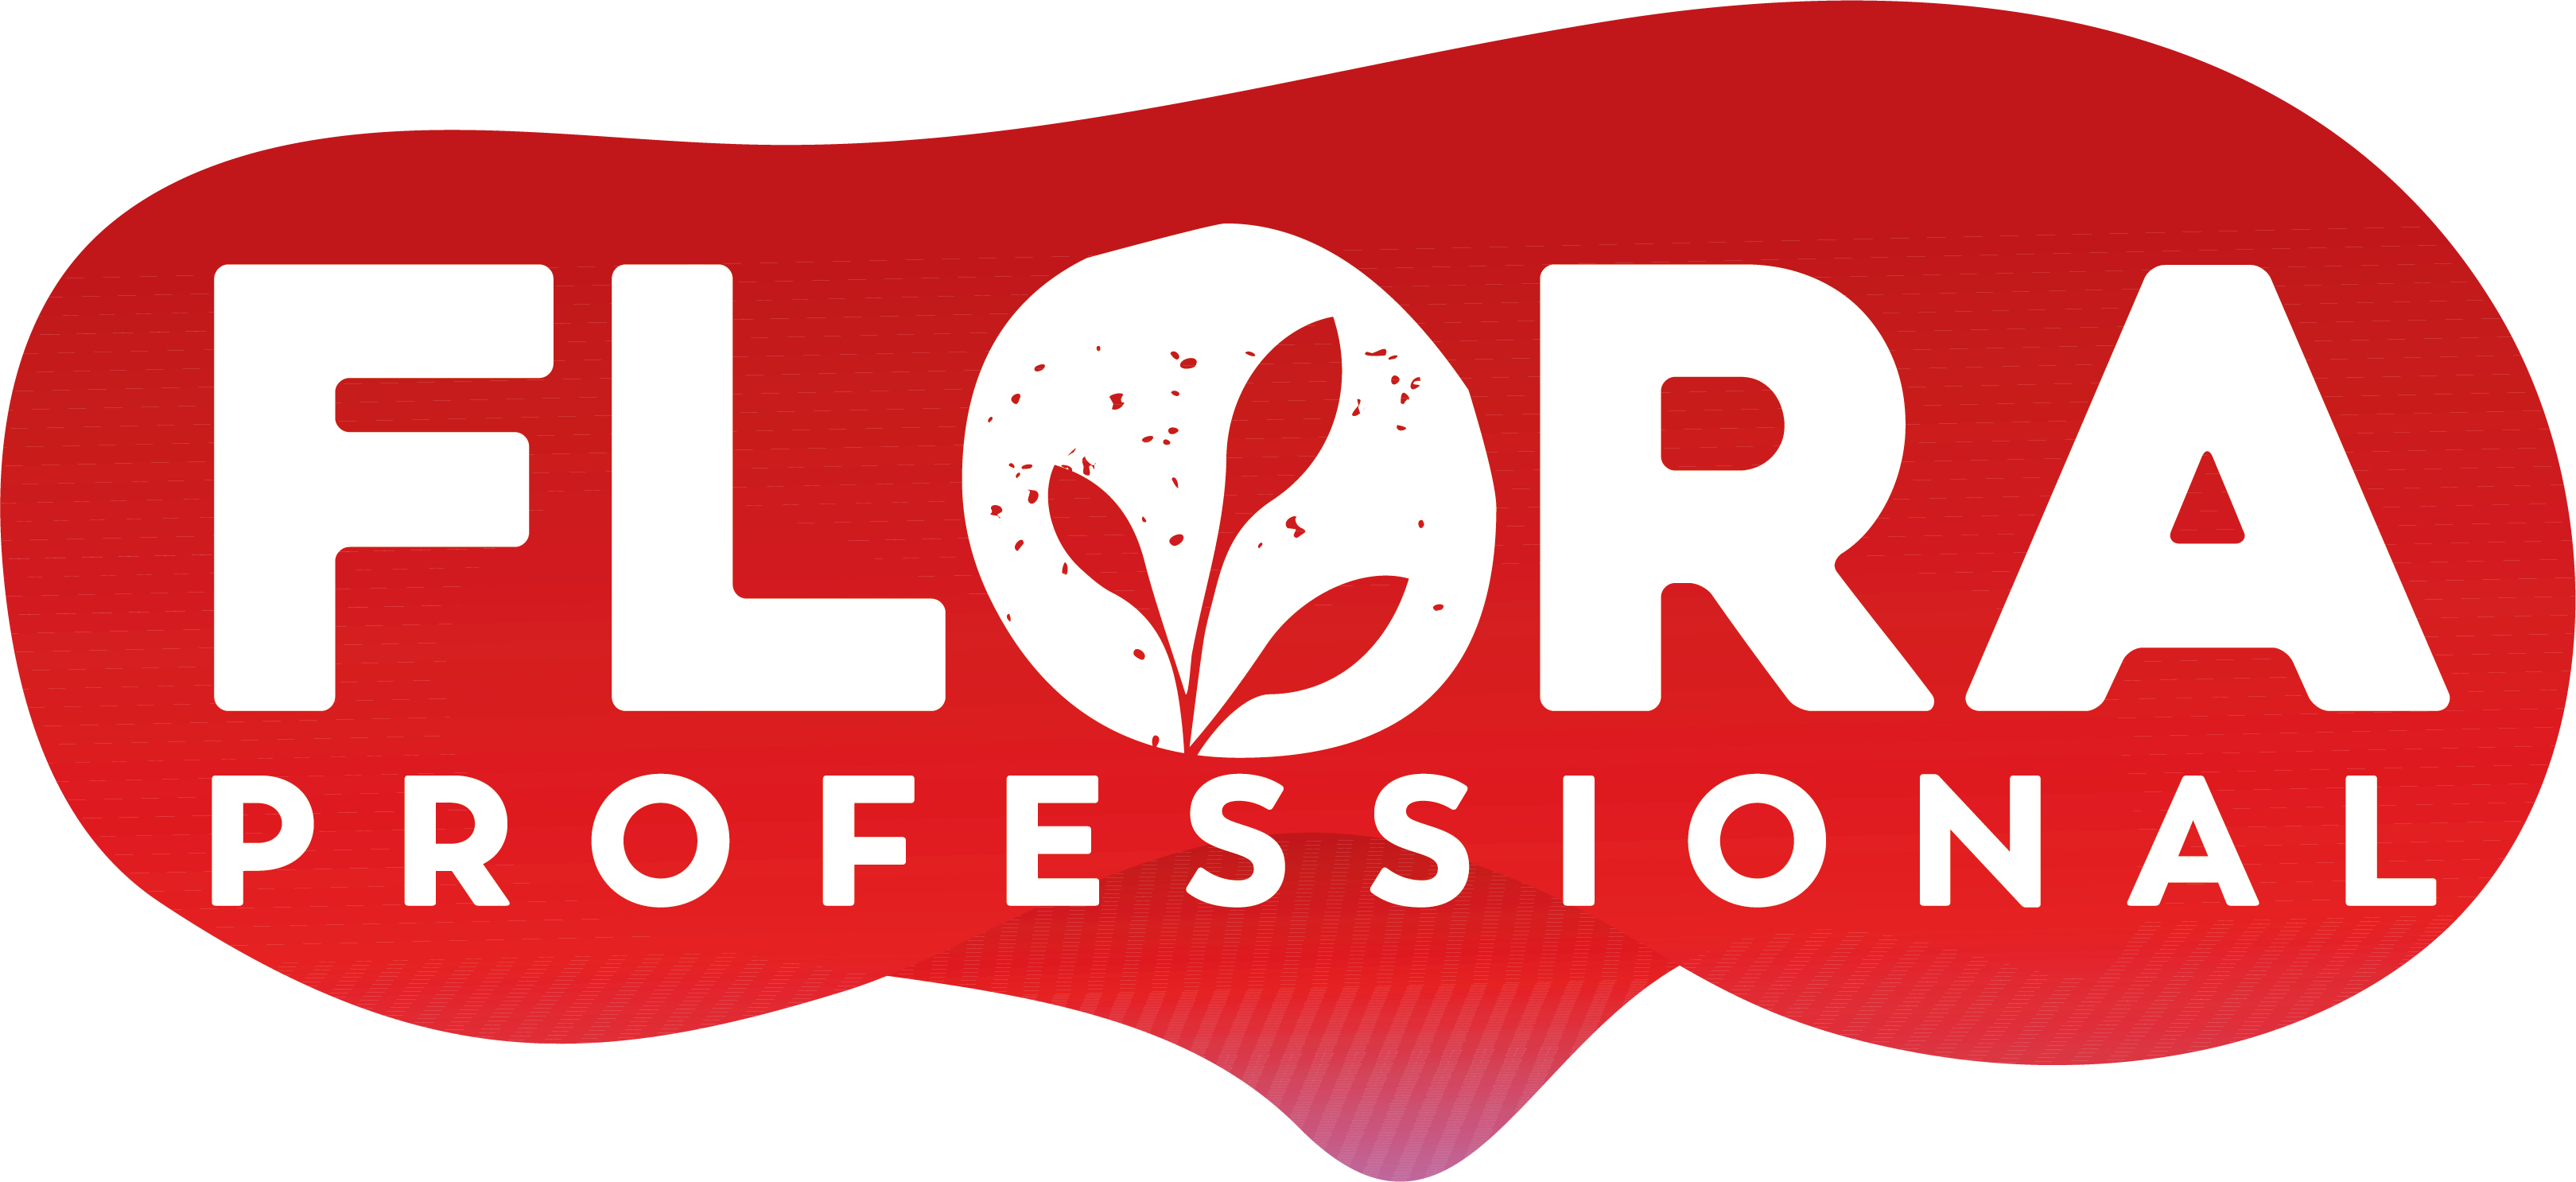 flora professional logo